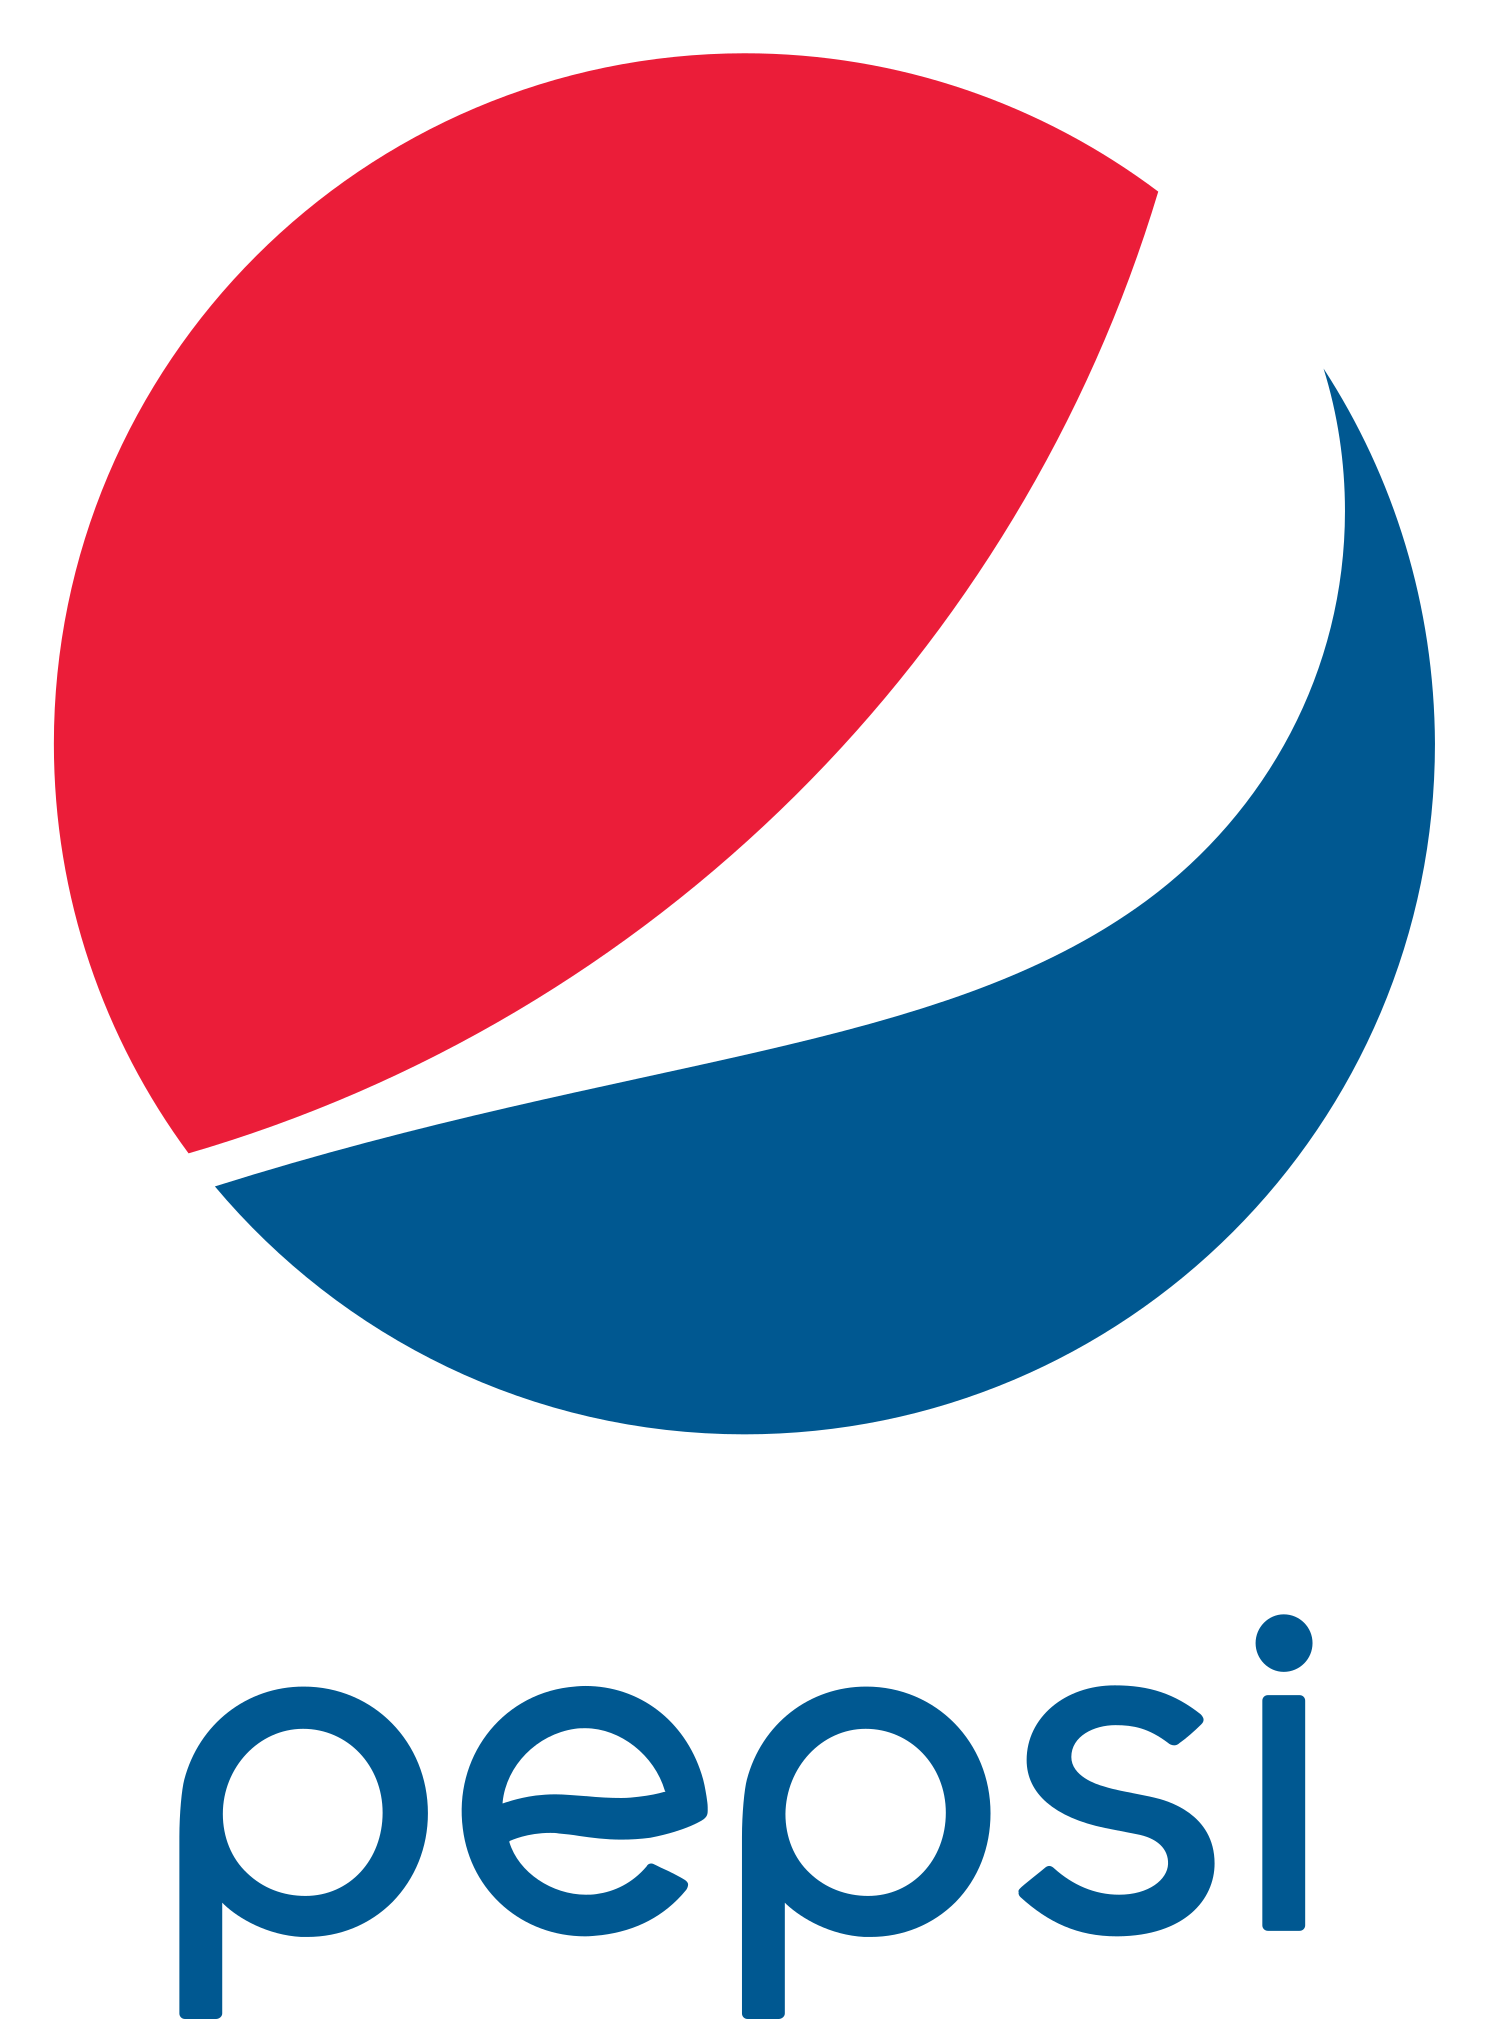 File:Pepsi logo 2014.svg - Wikipedia